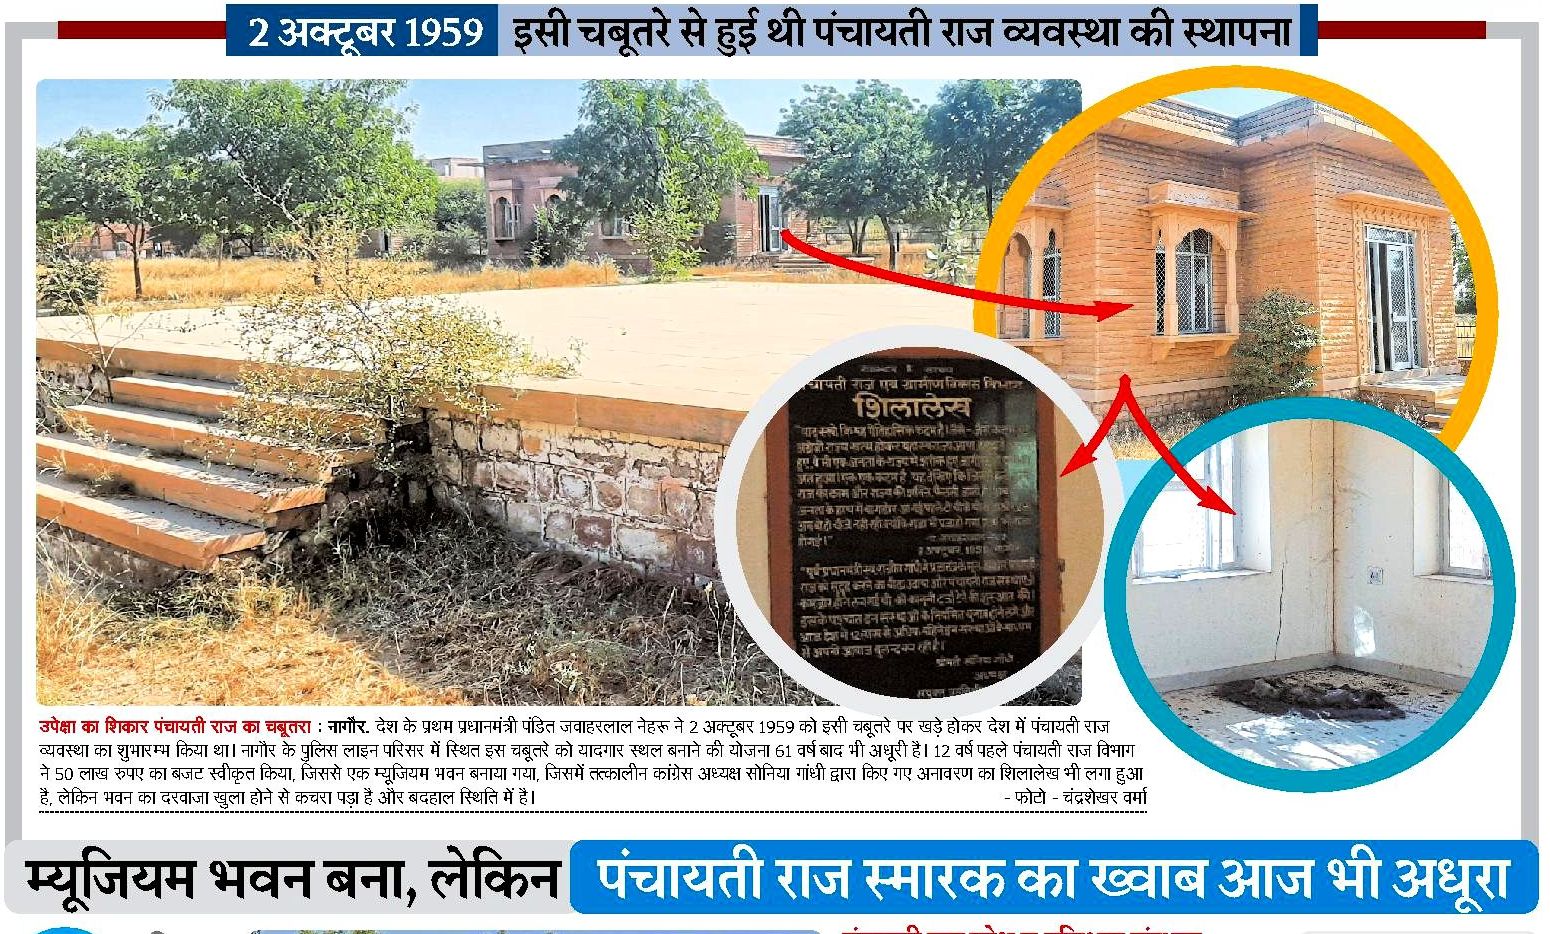 The dream of Panchayati Raj memorial in Nagaur is still incomplete